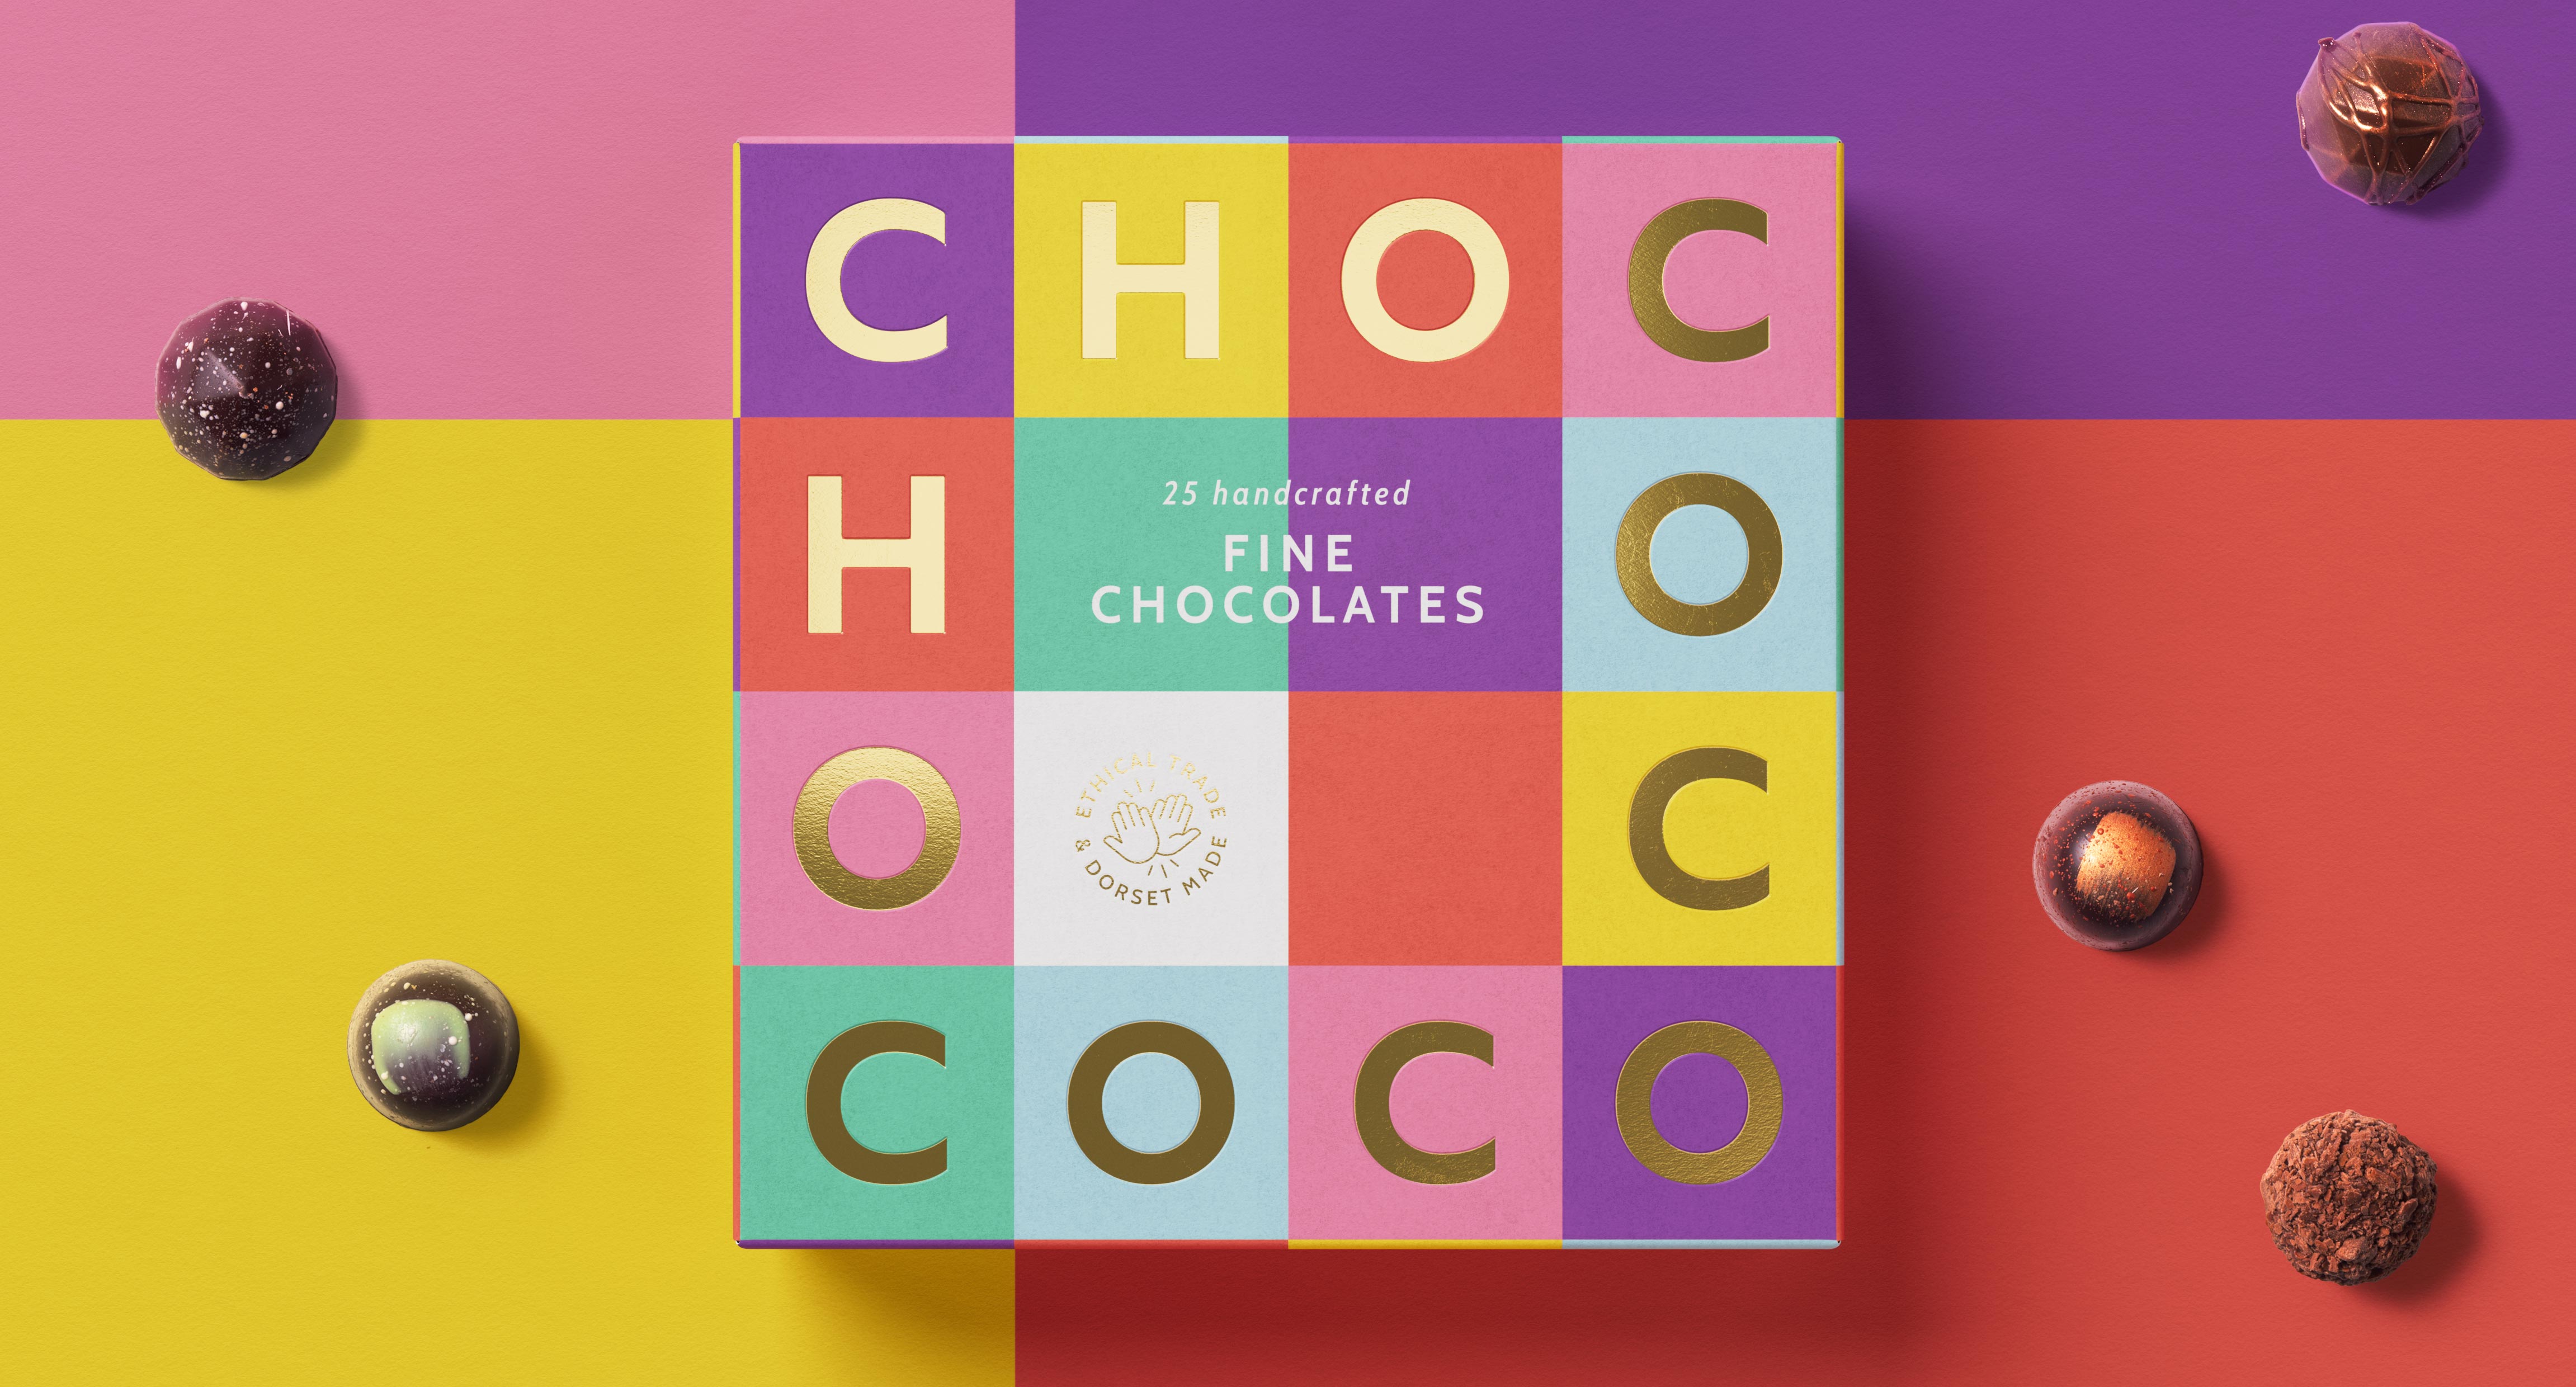 Soulful Chocolate: Revitalising Chococo’s Identity with Geometric Elegance Designed by Buddy Creative